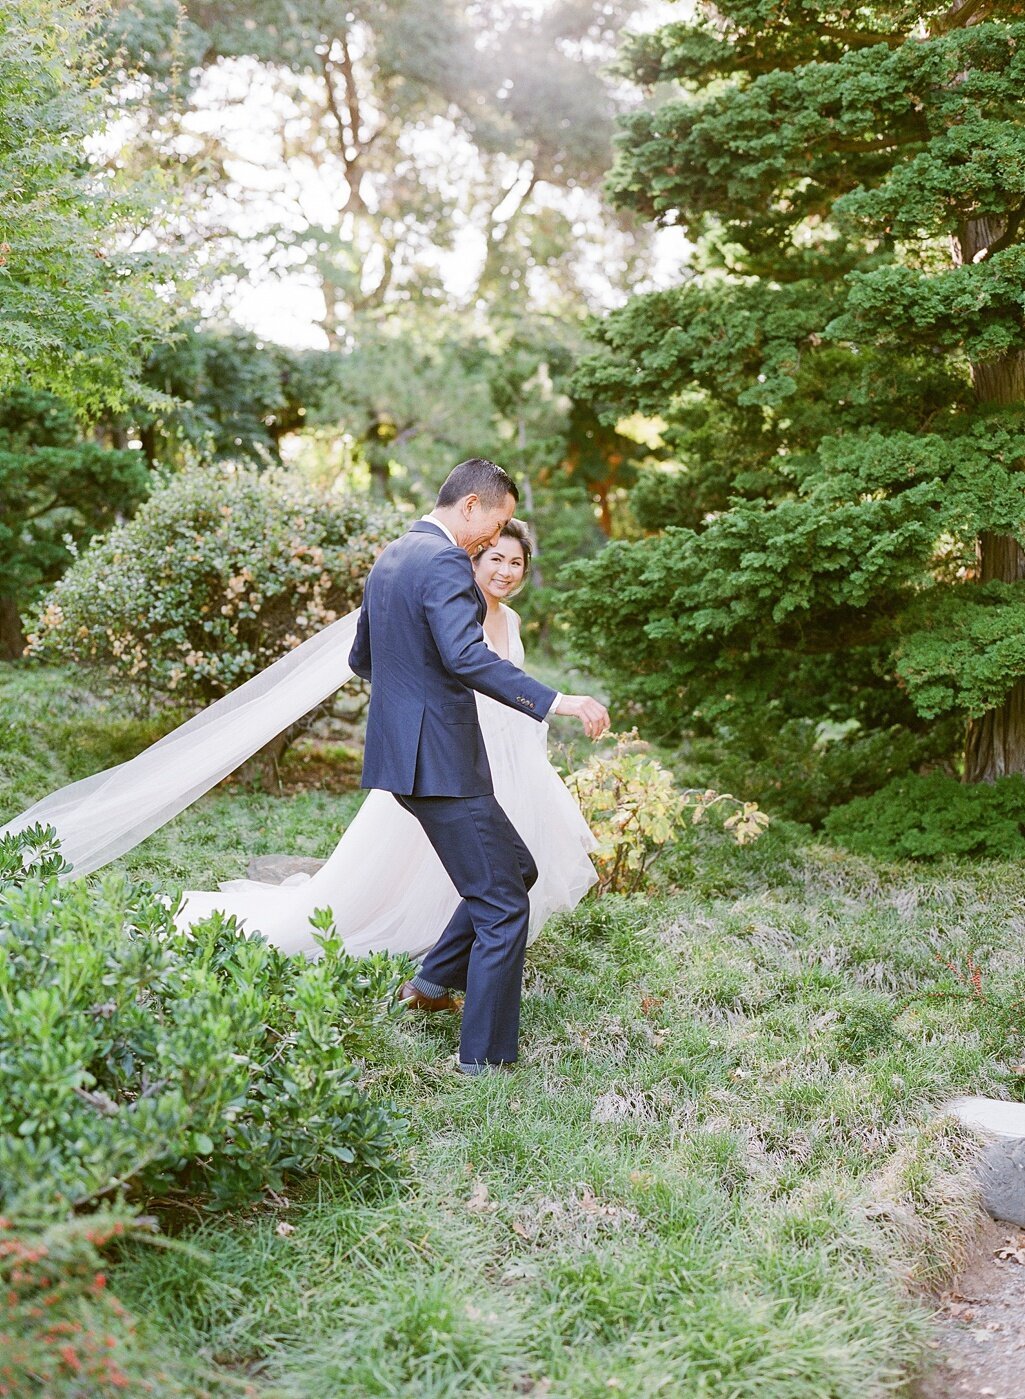 Jessie-Barksdale-Photography_Hakone-Gardens-Saratoga_San-Francisco-Bay-Area-Wedding-Photographer_0047